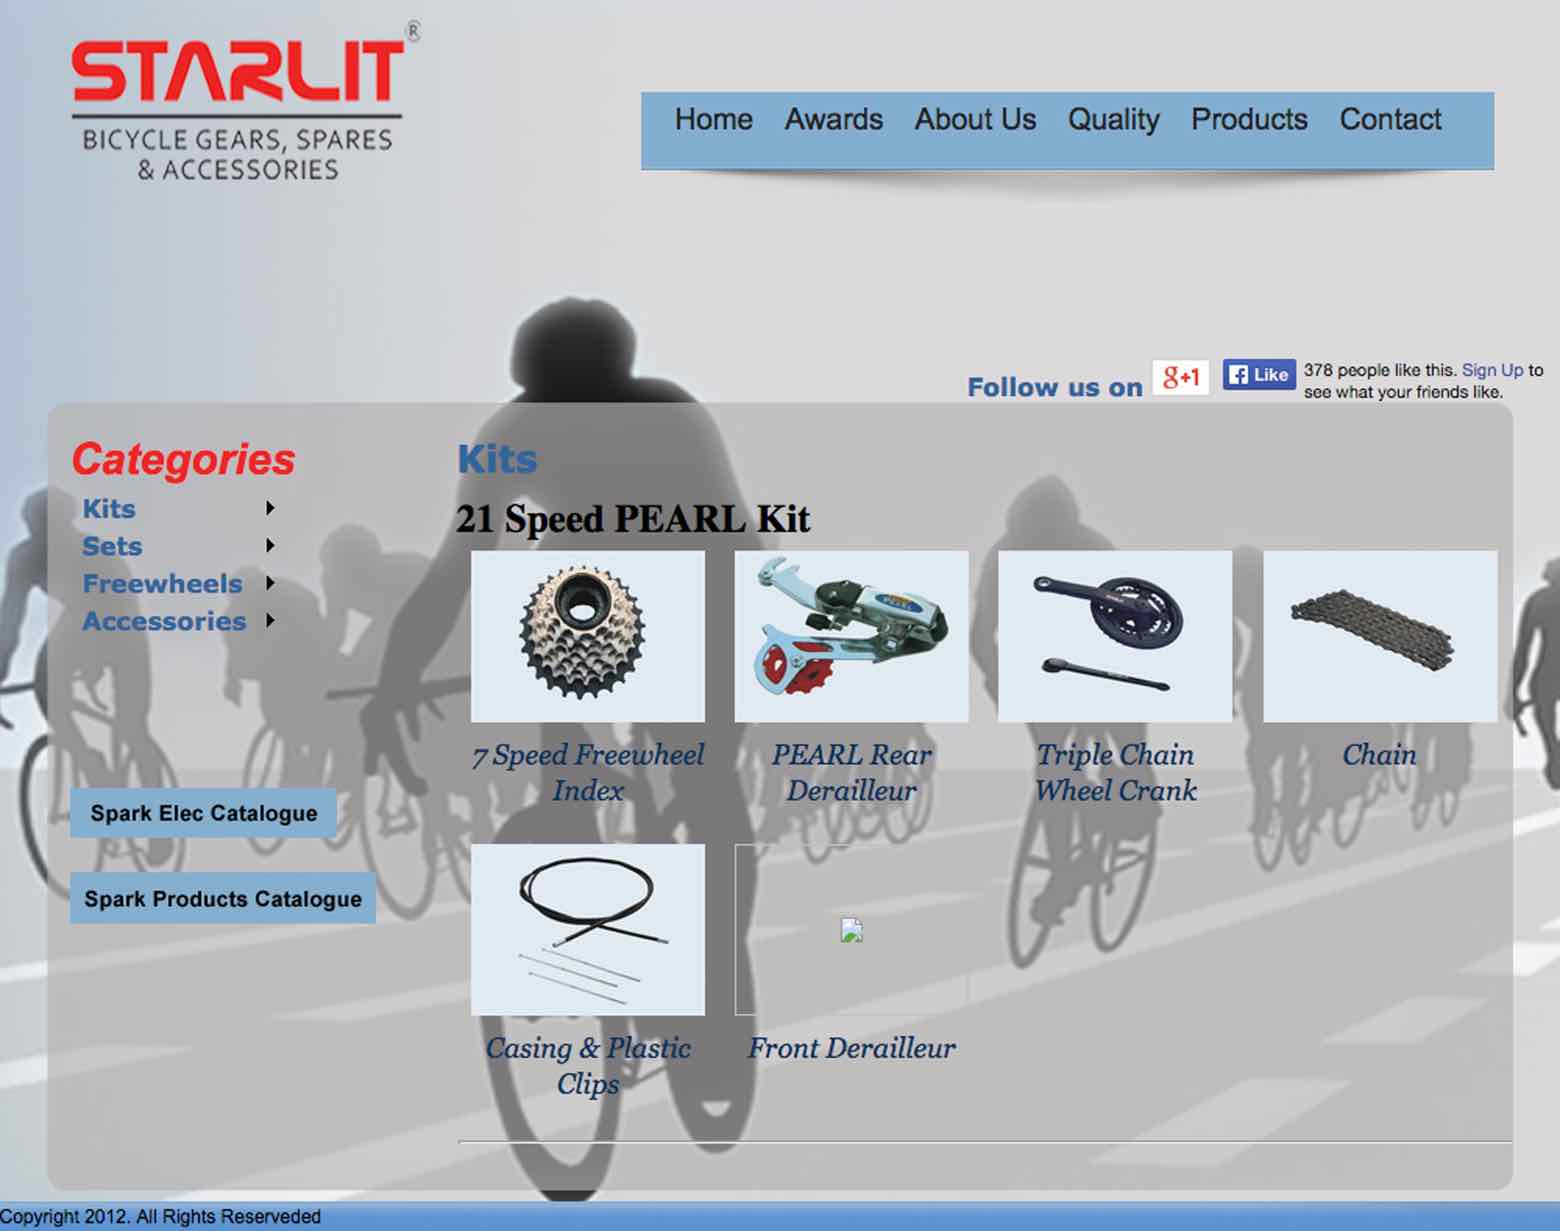 Starlit - web site 2014? image 5 main image